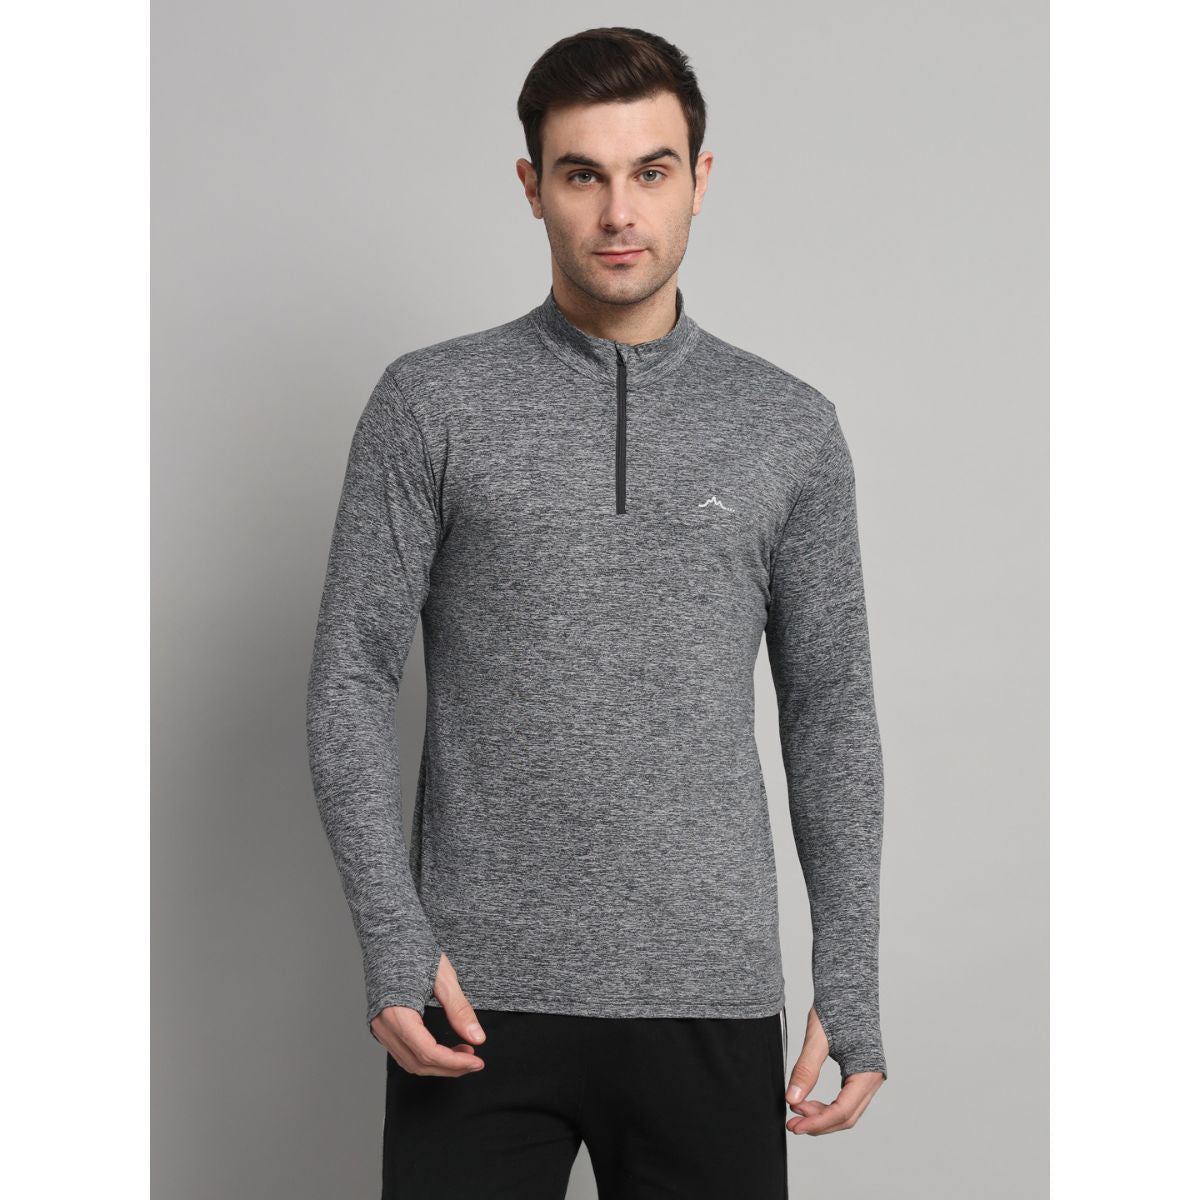 Men's Nomadic Full Sleeves T-Shirt / Baselayer - Charcoal Gray 1